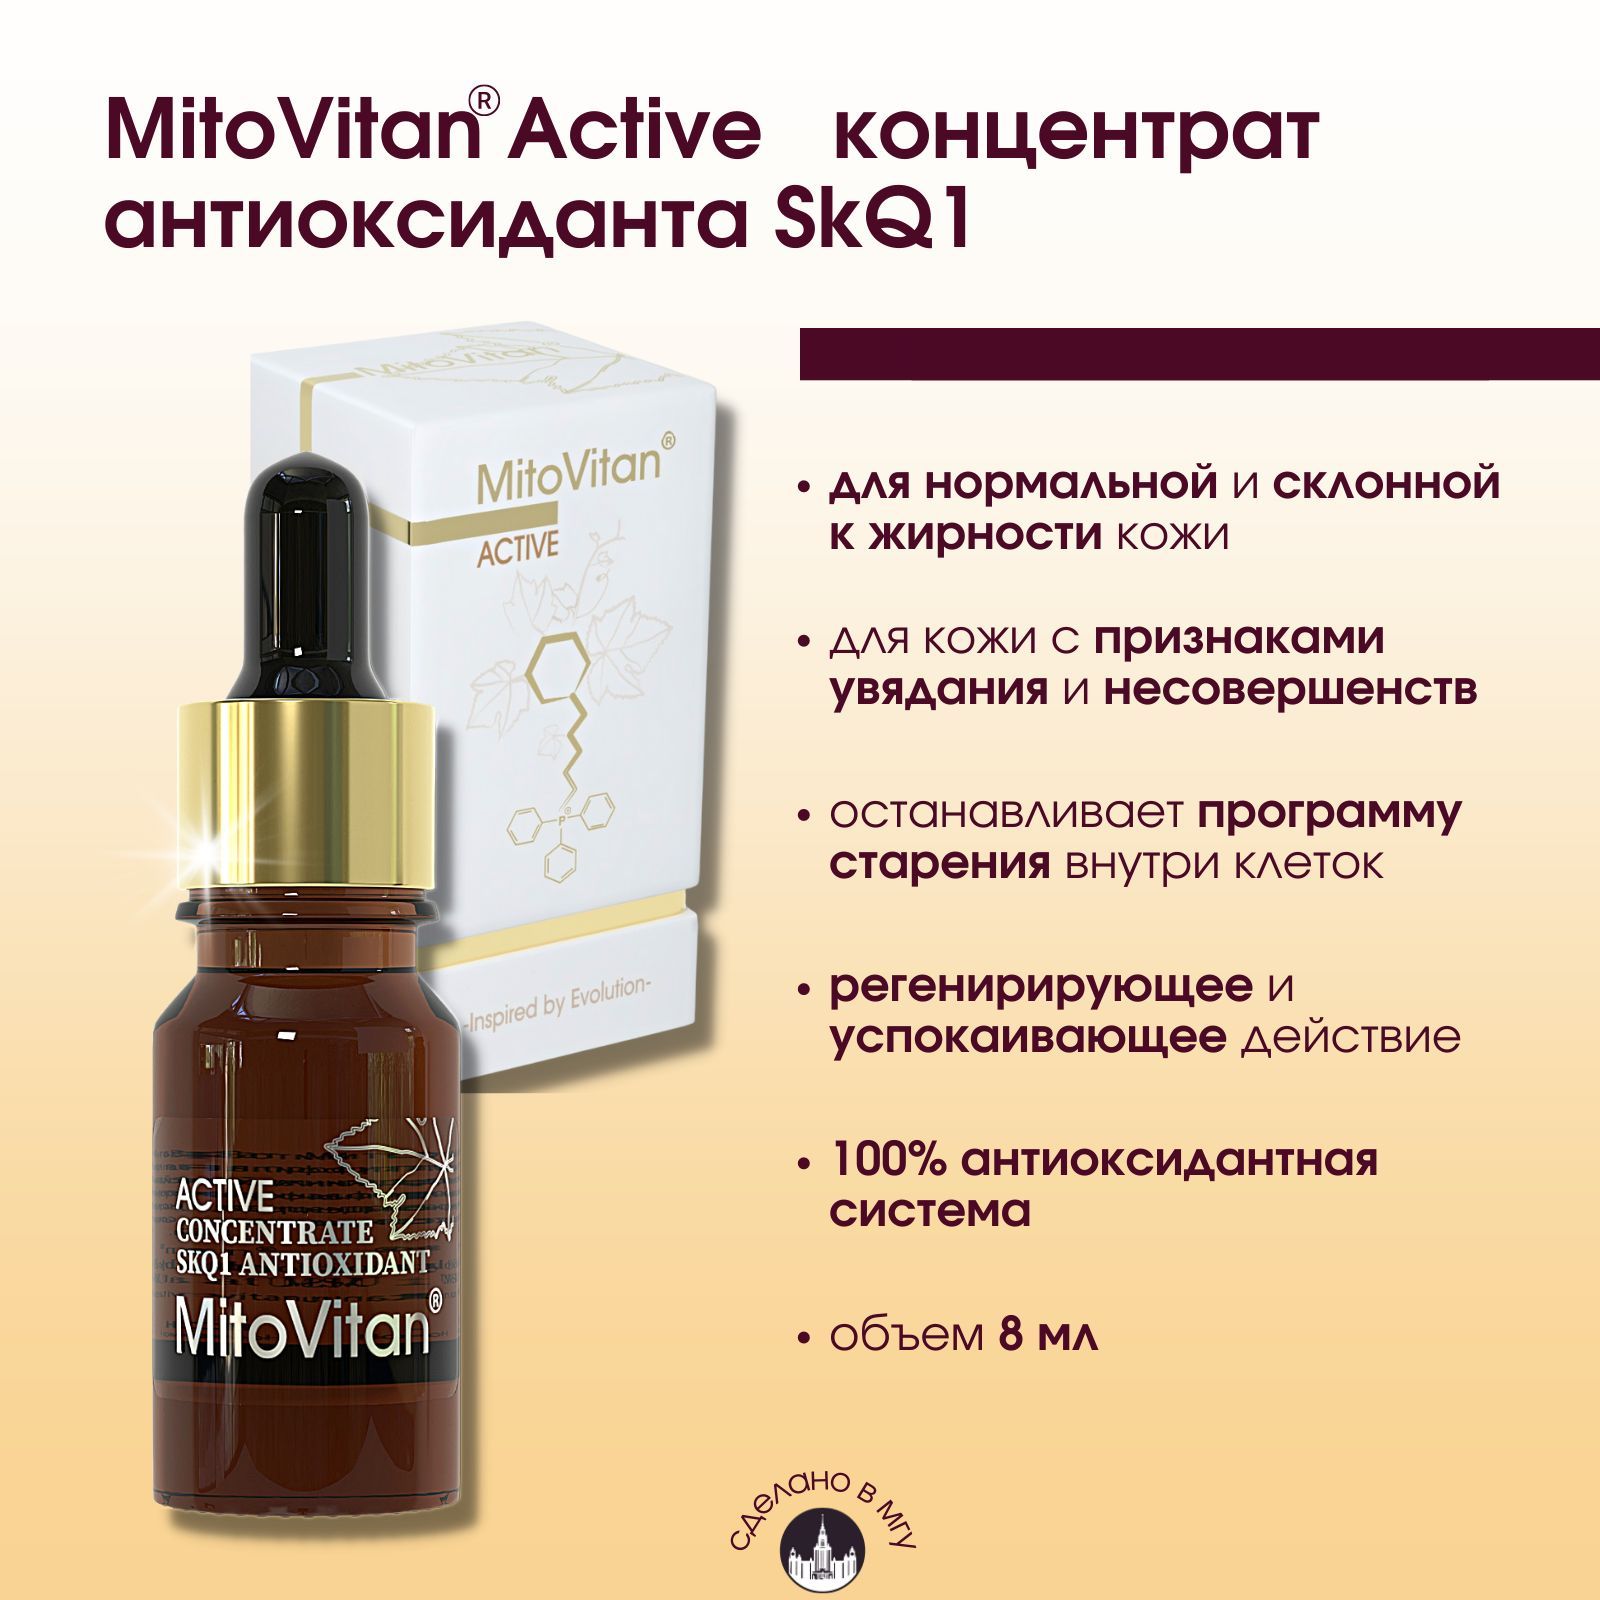 Концентрат актив. MITOVITAN Active концентрат. МИТОВИТАН Актив. MITOVITAN Active+ концентрат антиоксиданта skq1. MITOVITAN Active Set концентрат антиоксиданта skq1 для лица, шеи и области декольте.